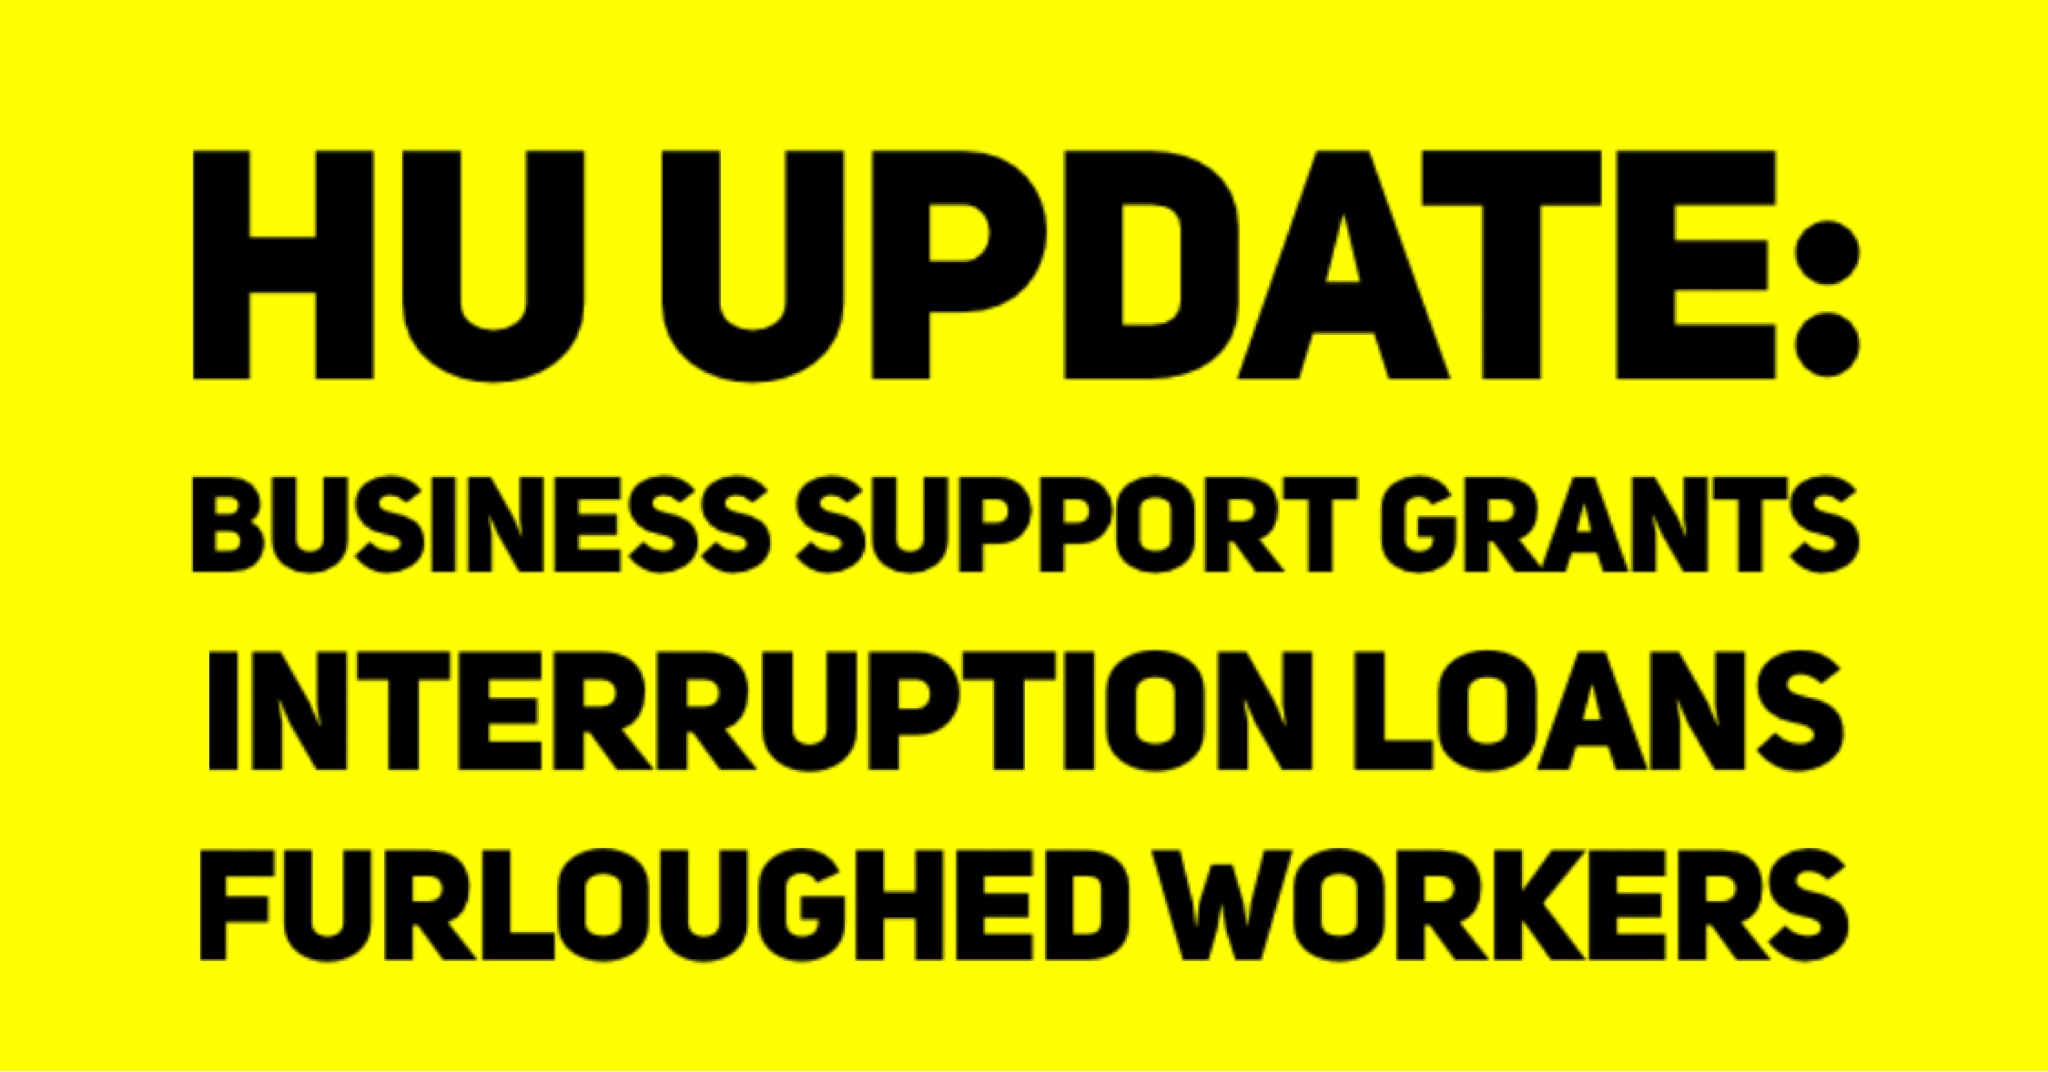 HU UPDATE Business Support Grants Interruption Loans Furloughed Workers